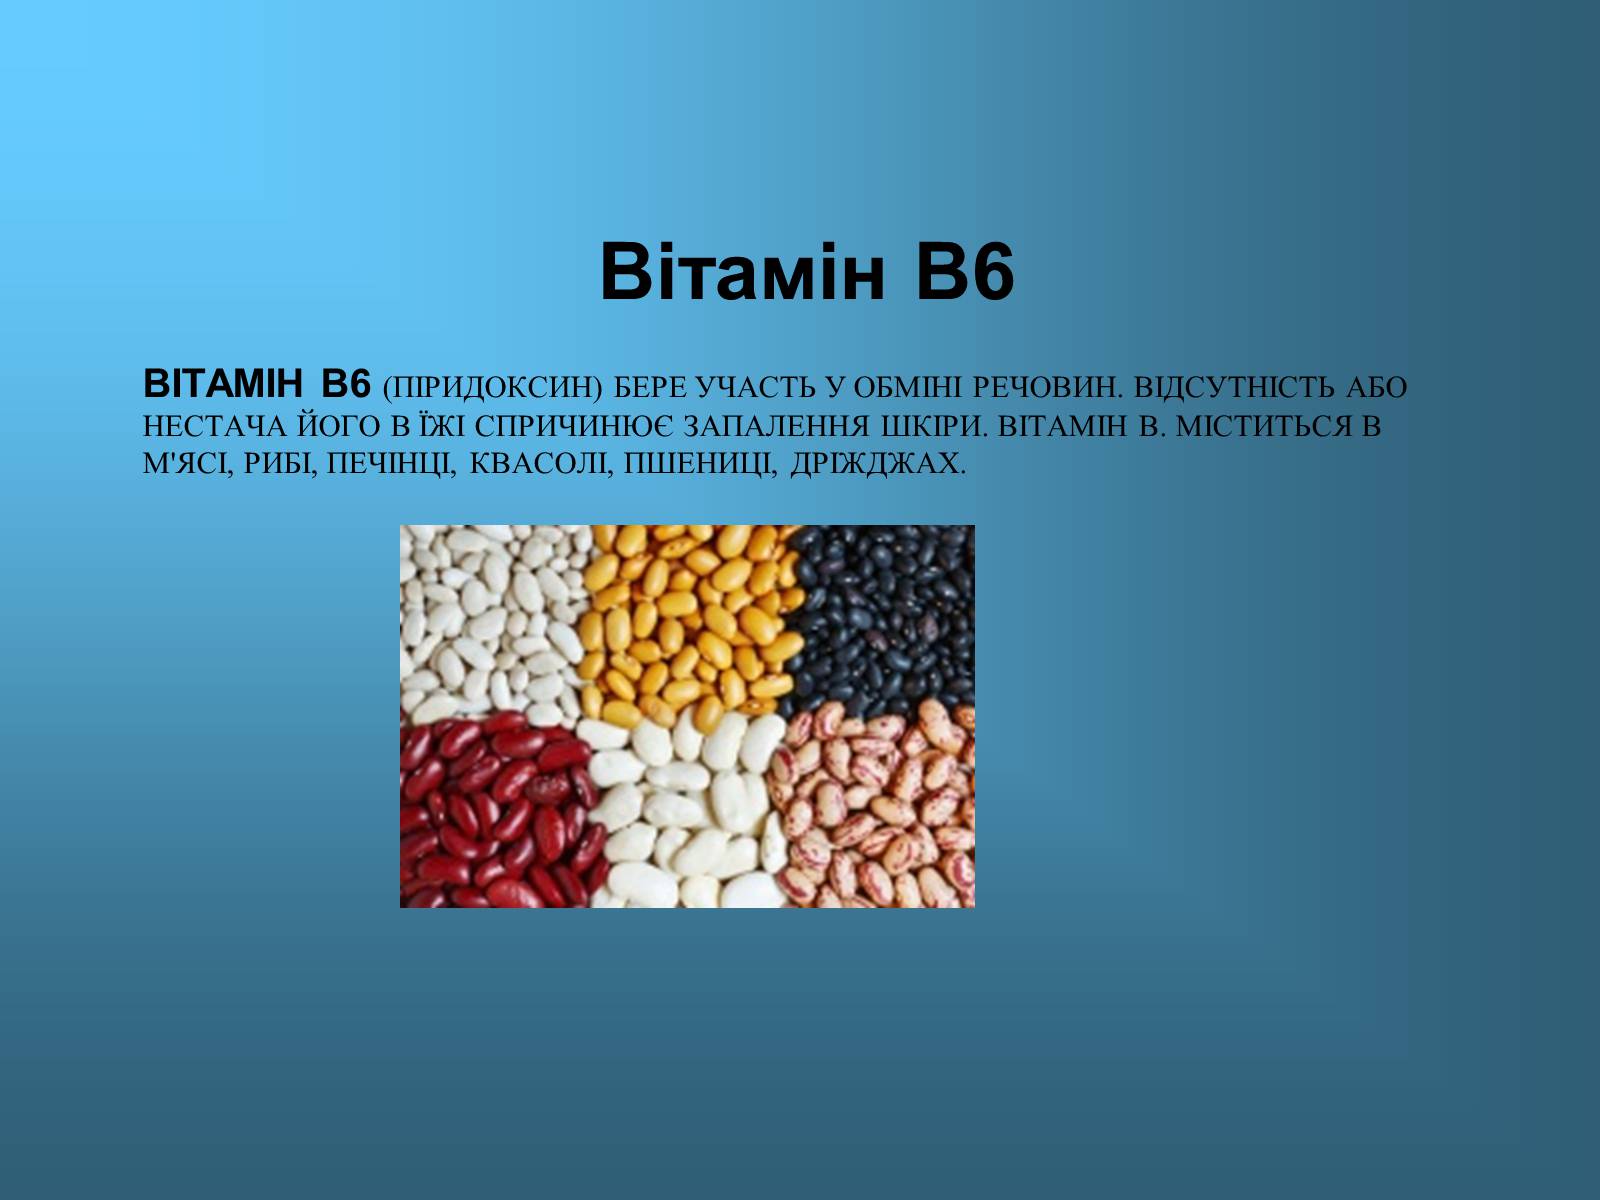 6988 ДІАГАМА - Vitamin B1 in combination with vitamin B6 and/or vitamin B12